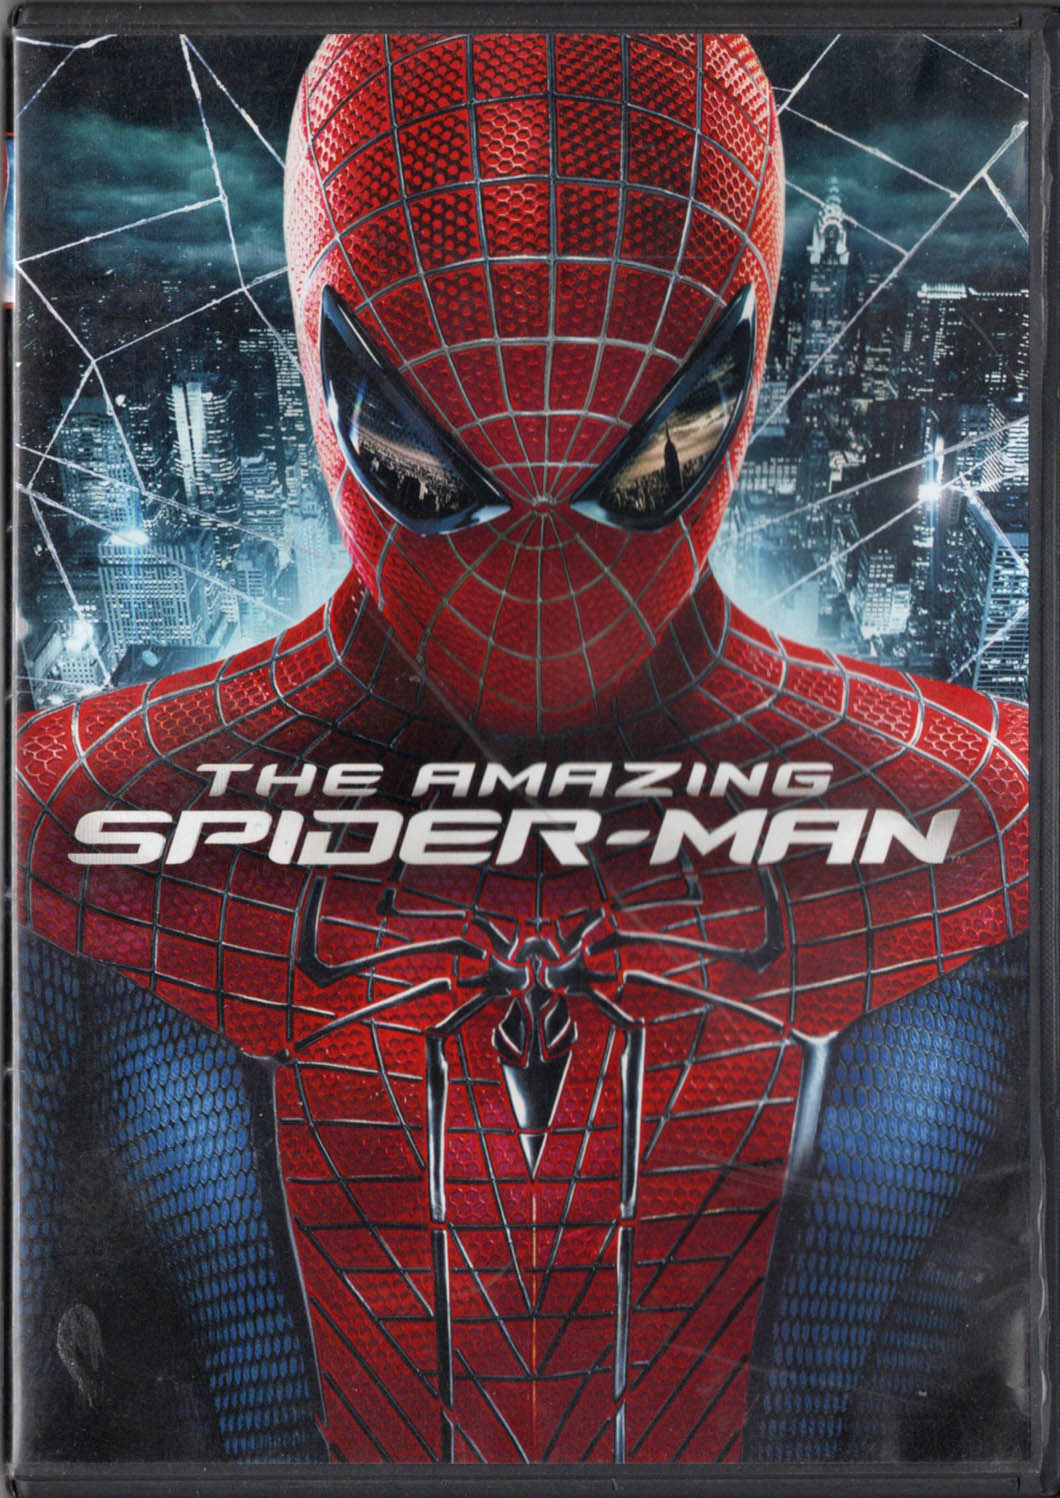 Andrew Garfield  Biography, Movies, TV Series, Plays, Spider-Man